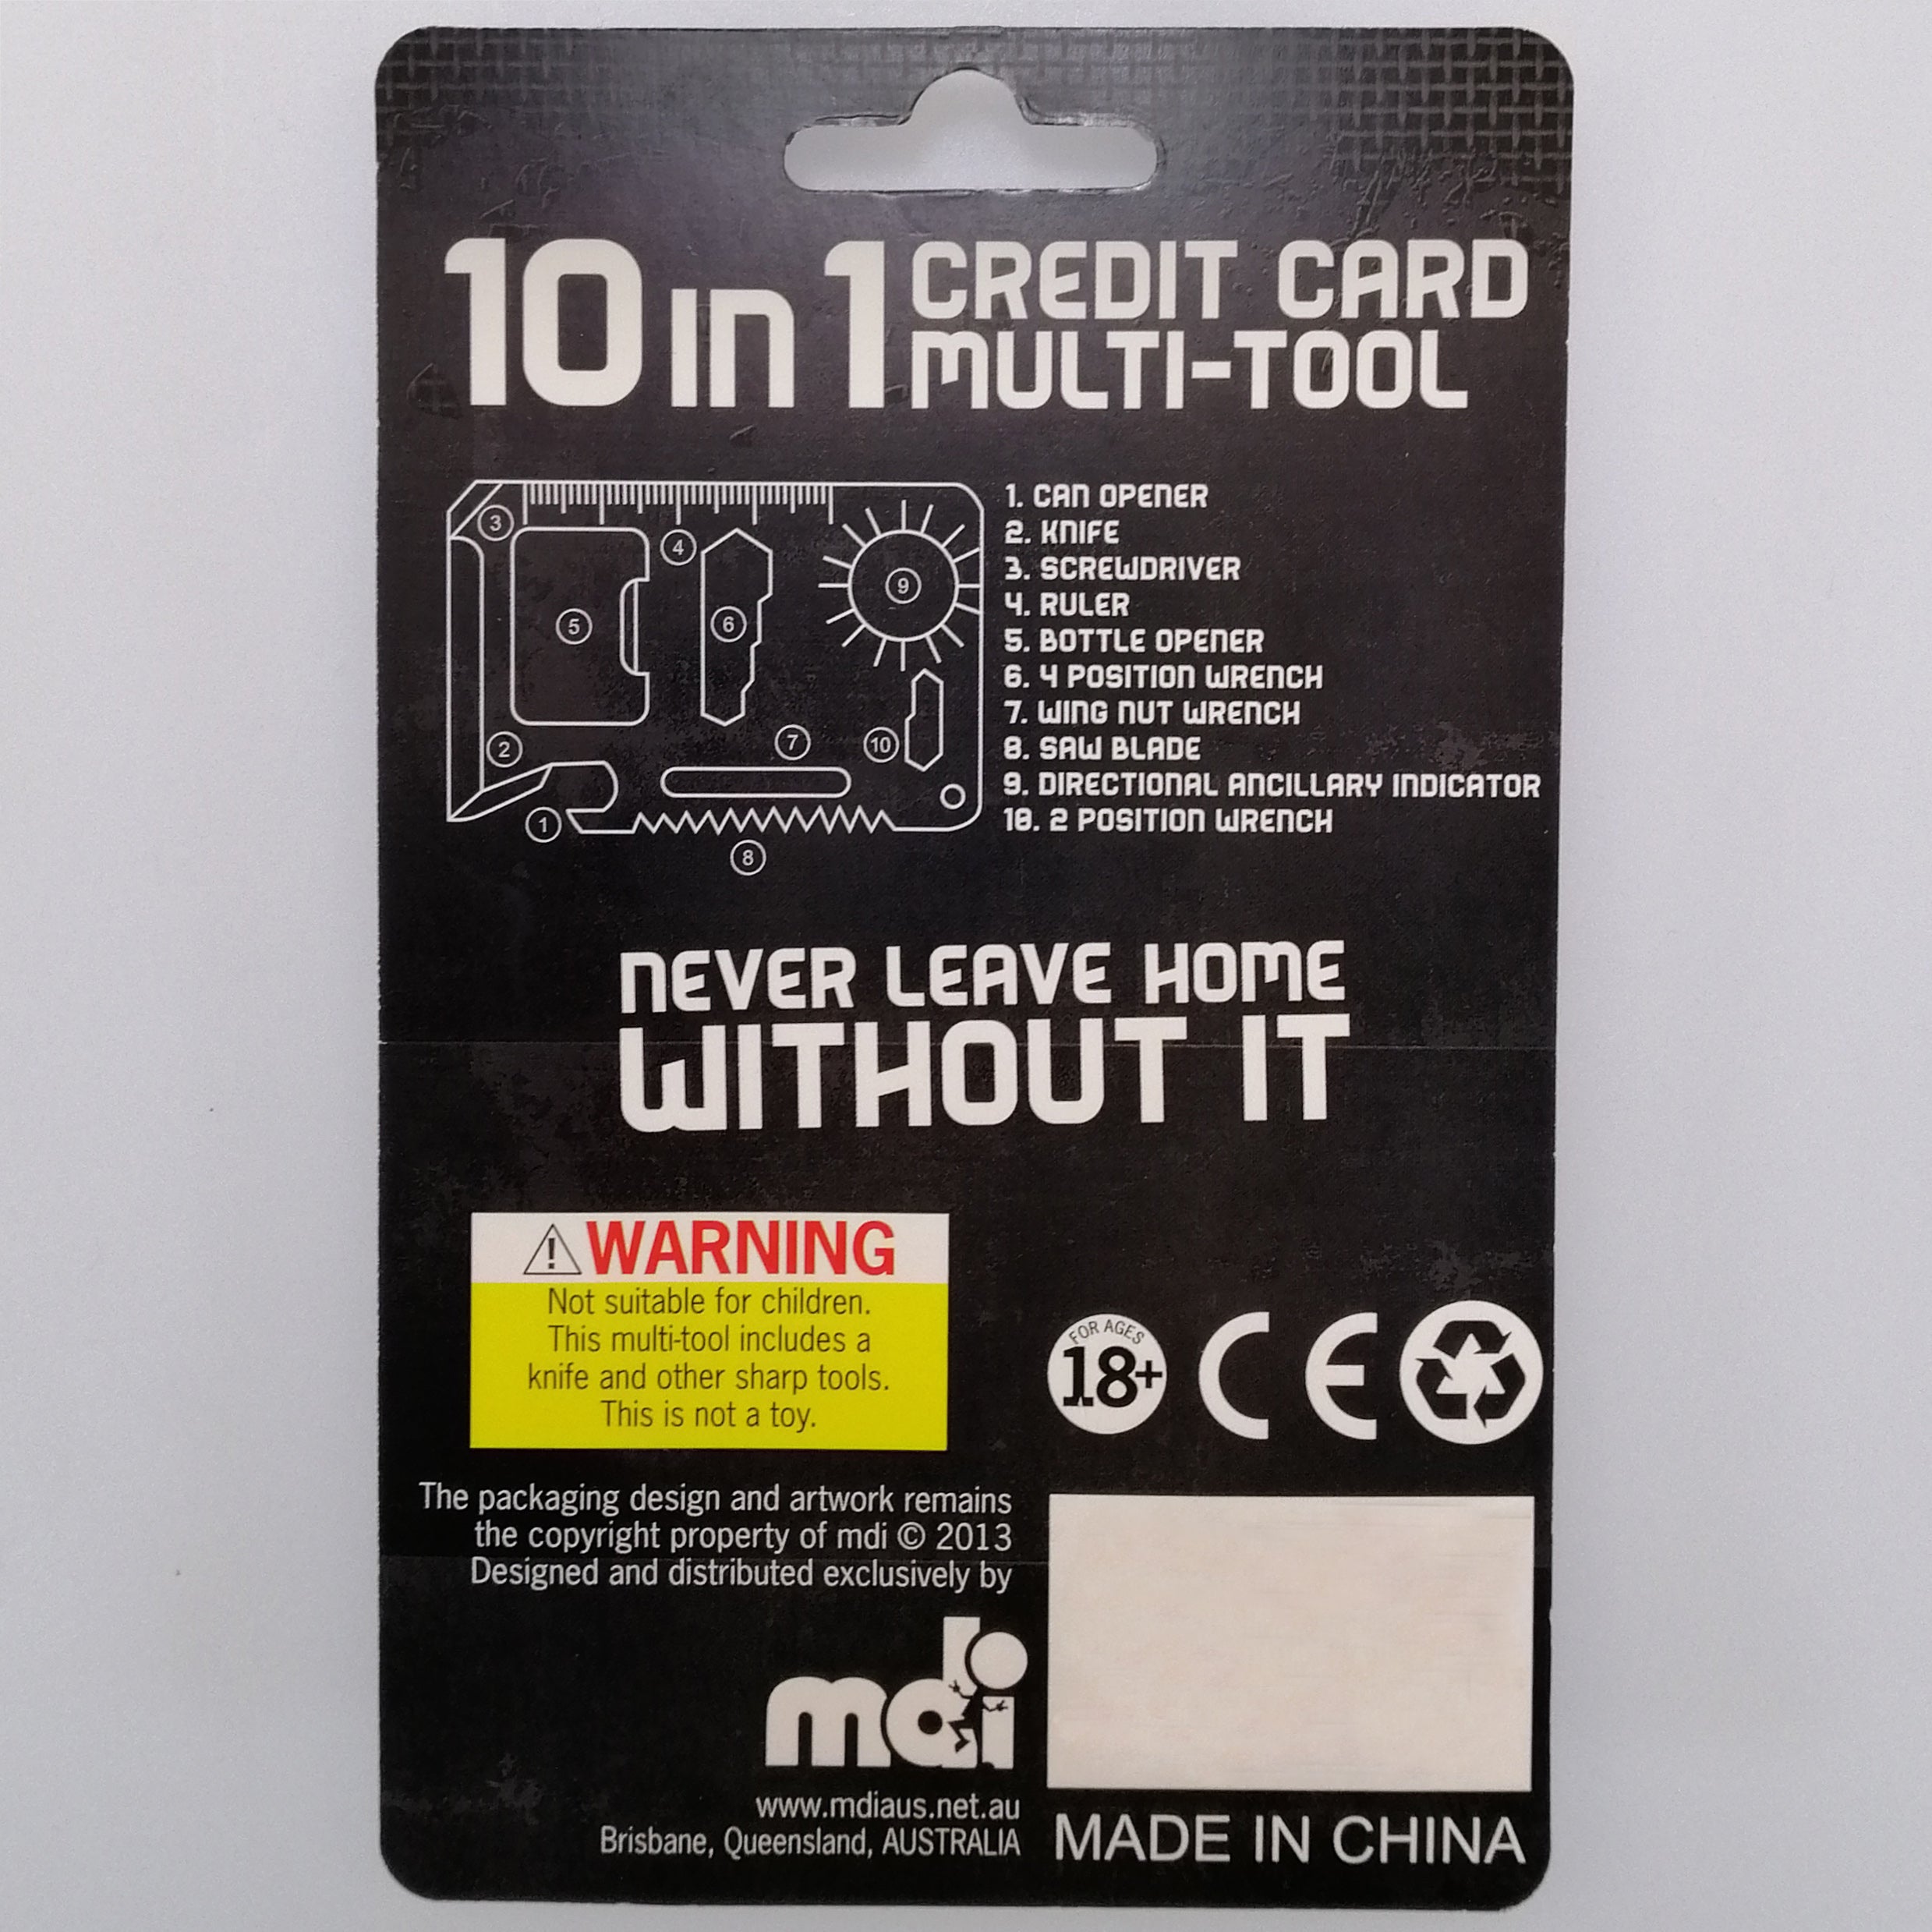 10 in 1 Credit Card Multi-Tool